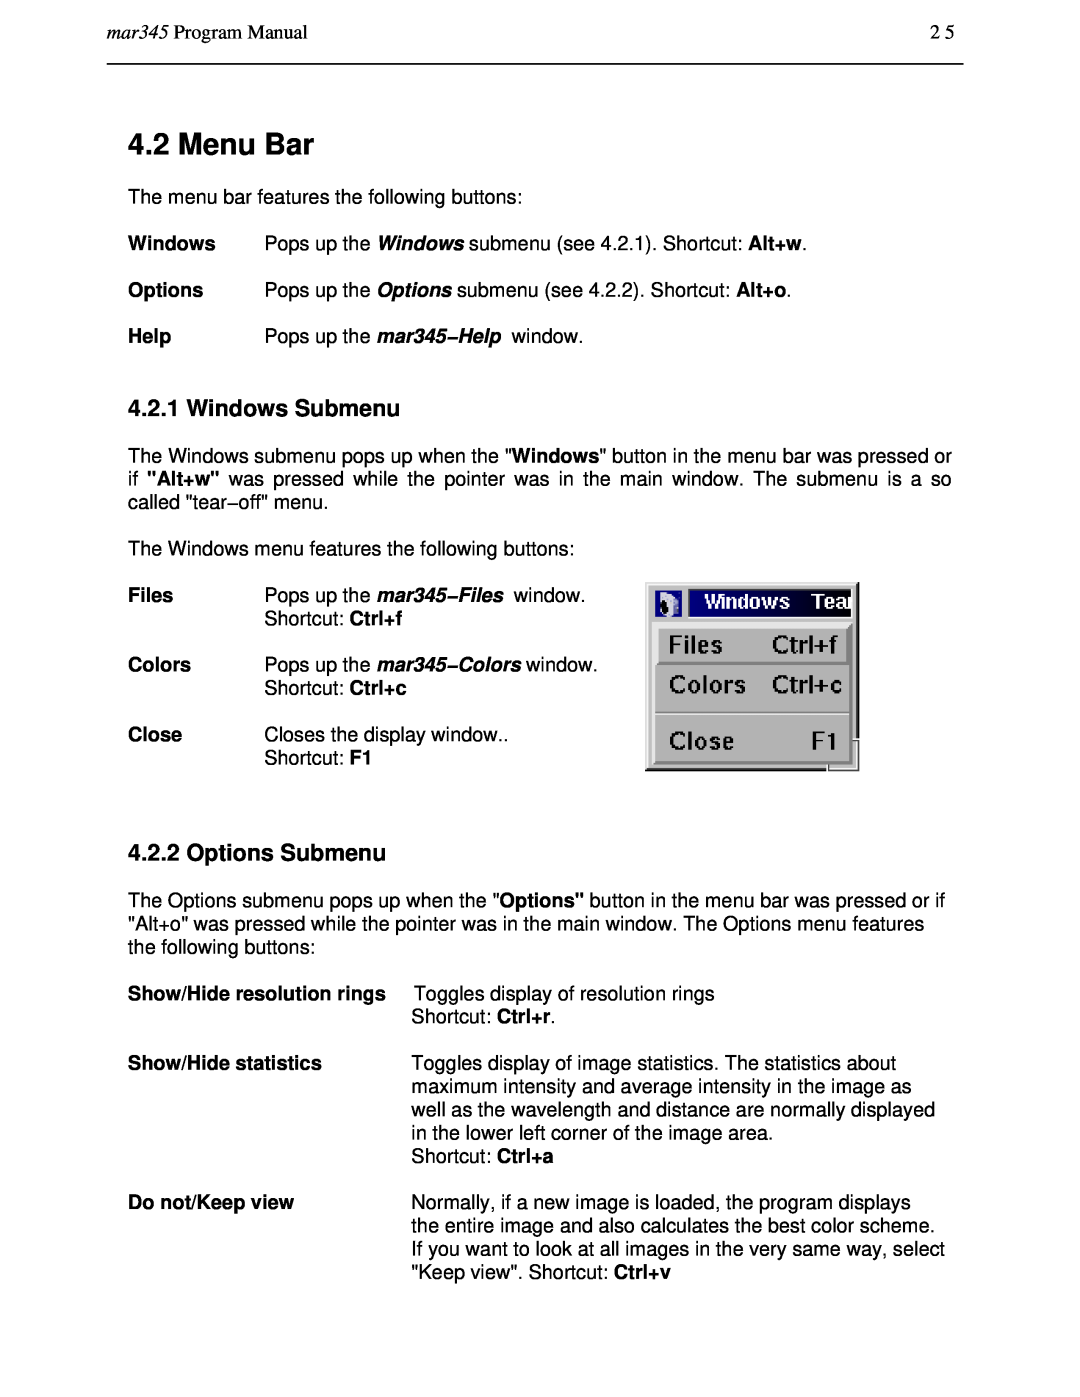 Compaq manual Menu Bar, Windows Submenu, Options Submenu, mar345 Program Manual 